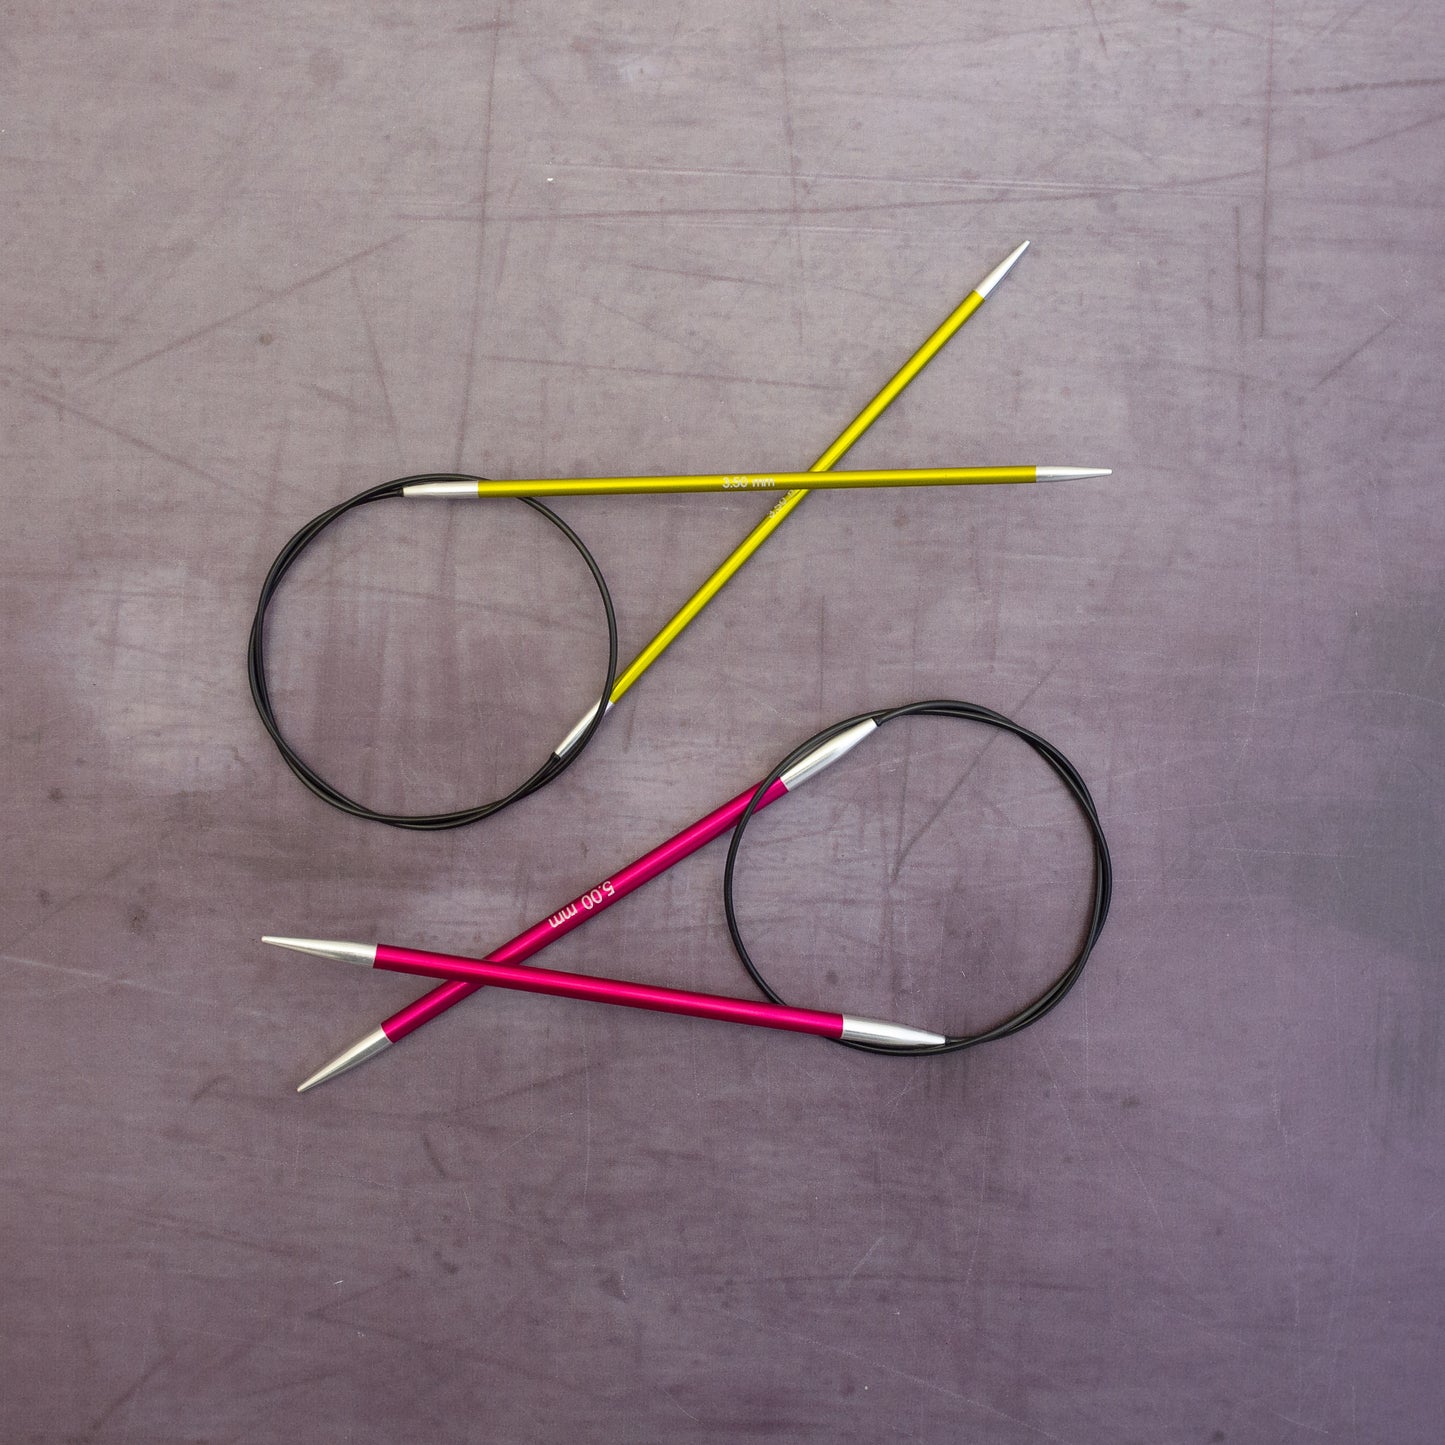 Knit Pro - Zing - fixed circular needles